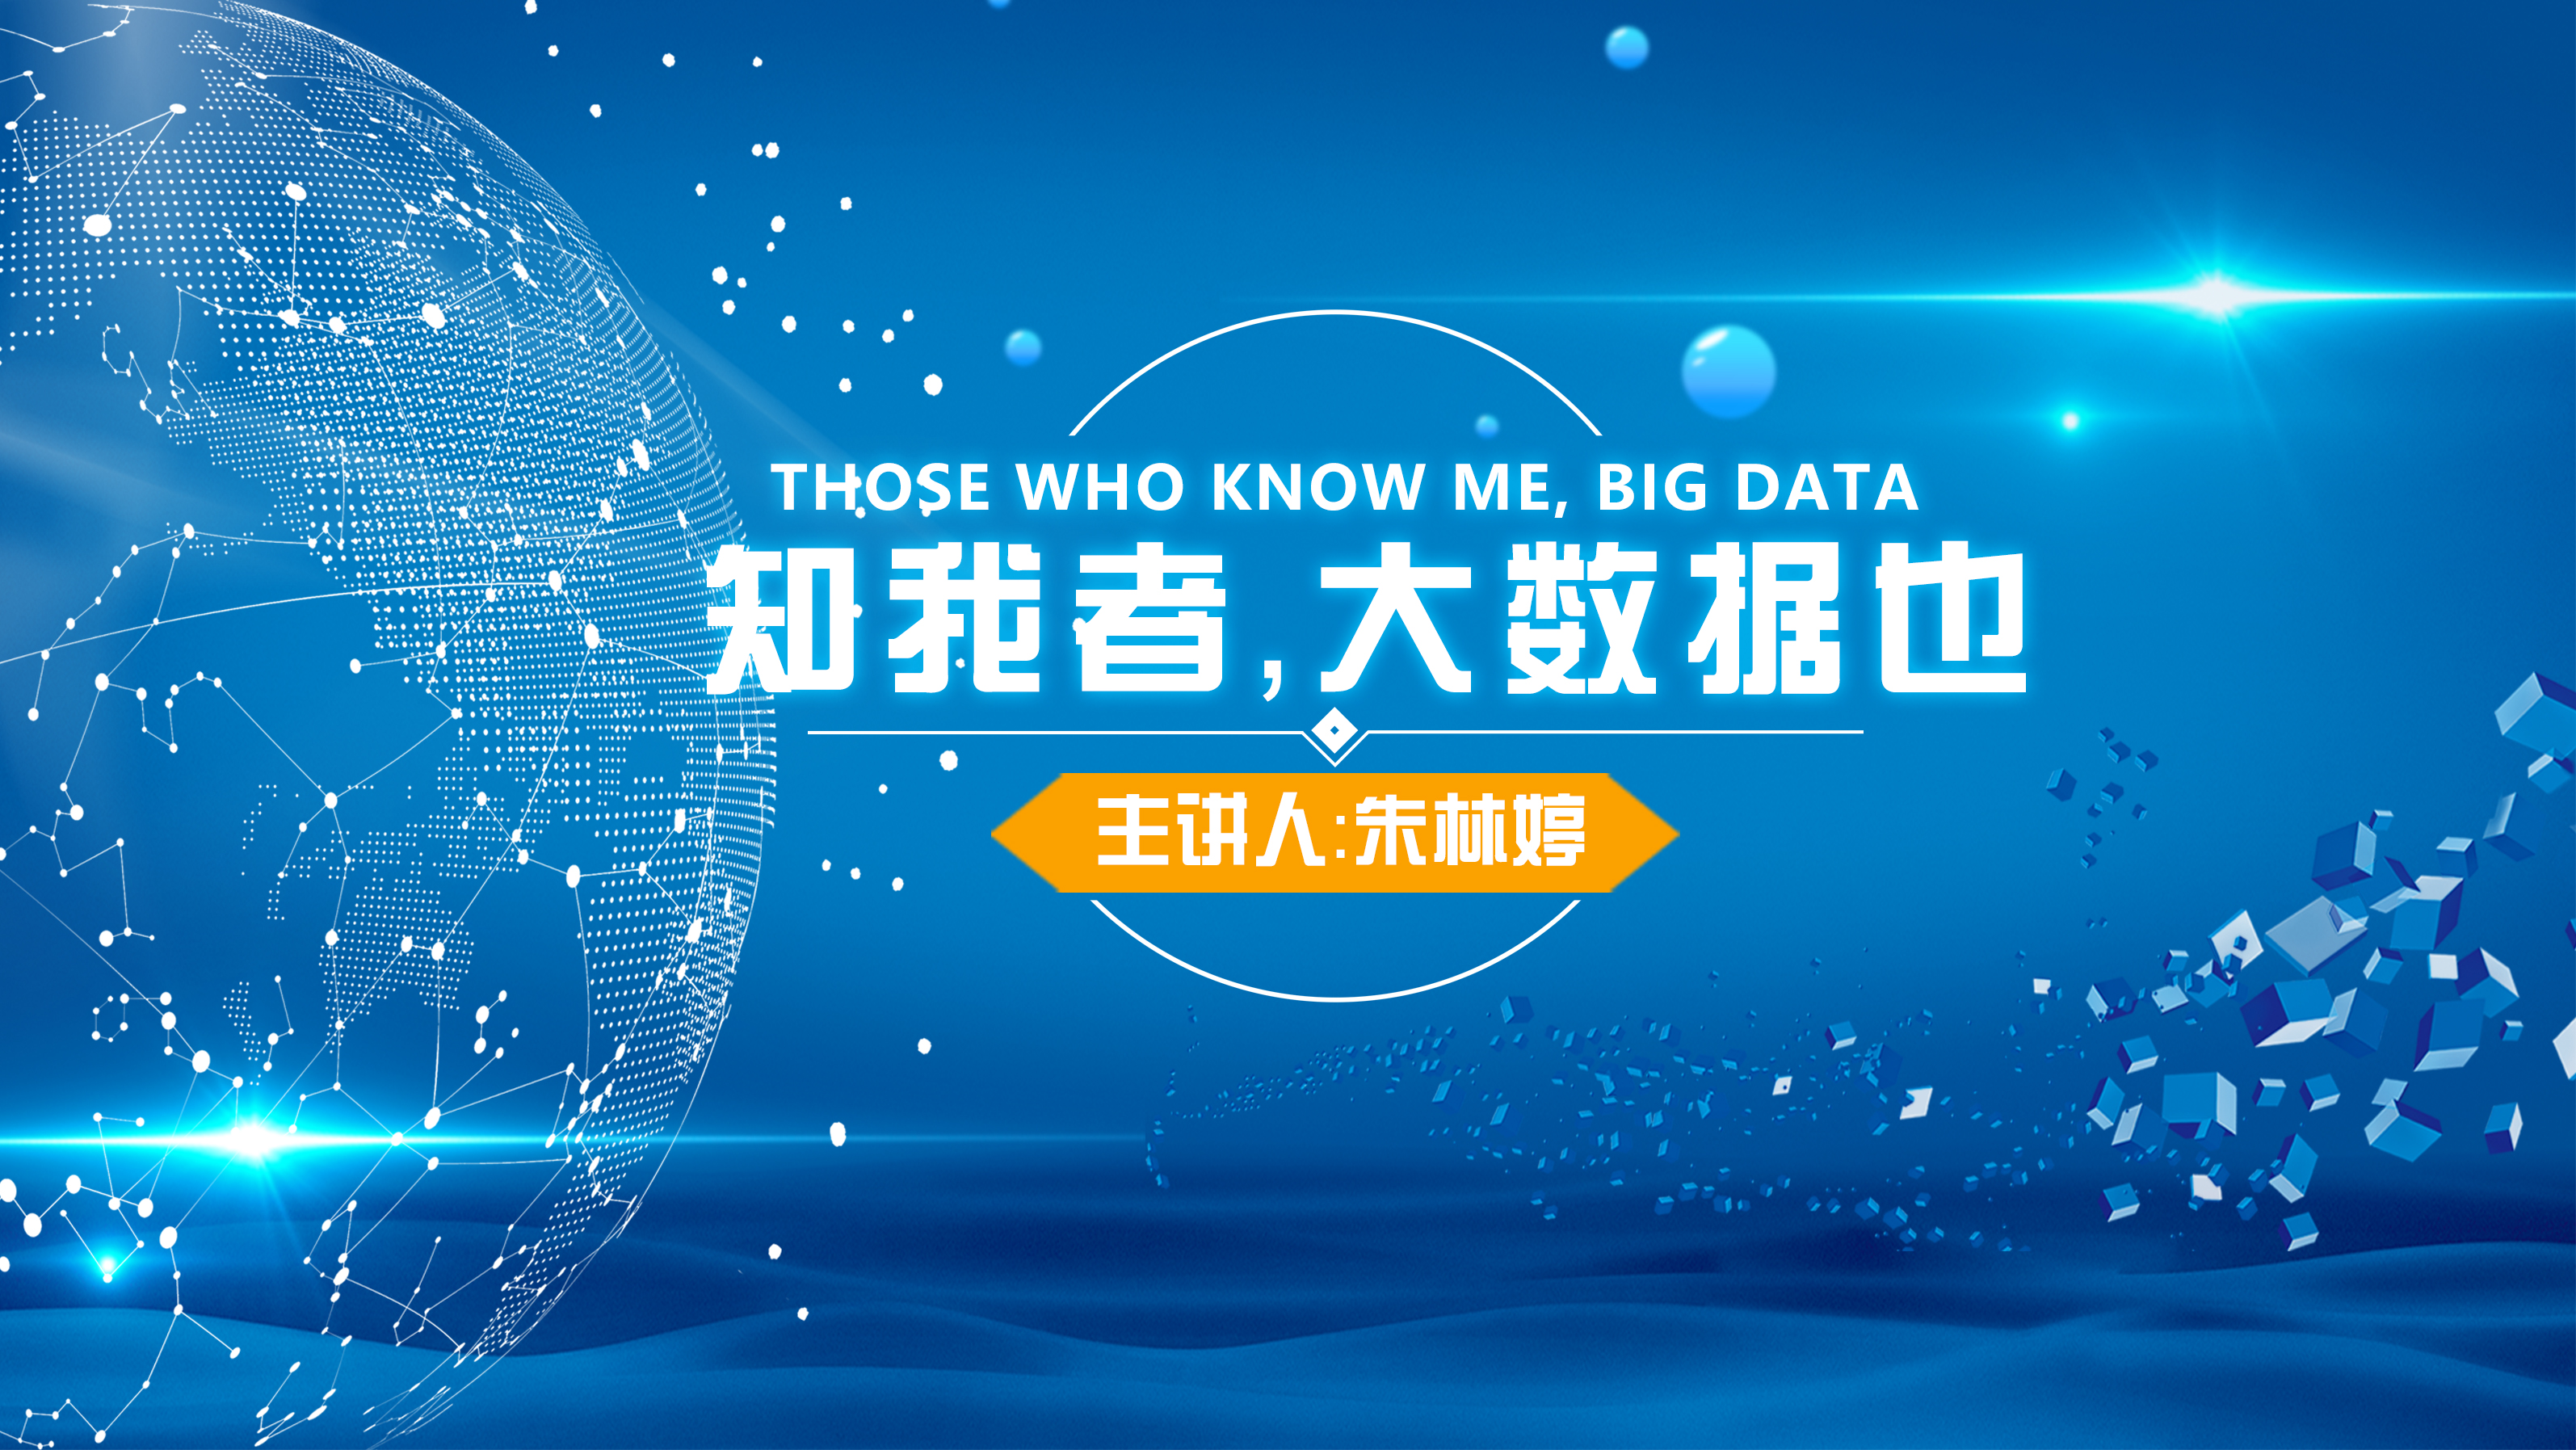 Those who know me, big data